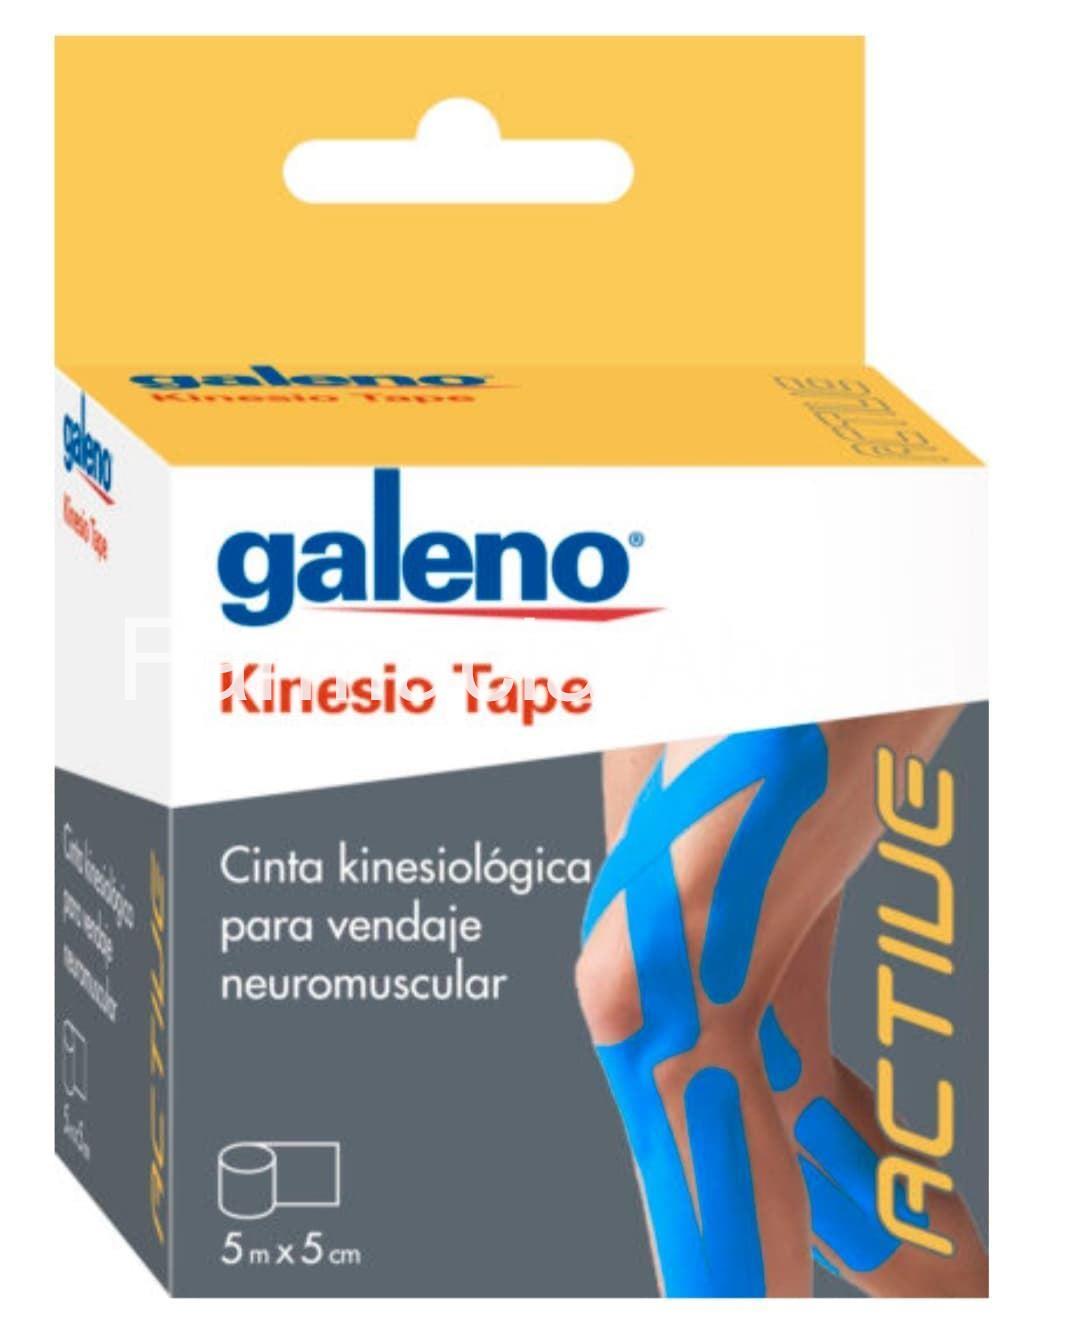 Cinta kinesiológica para vendaje neuromuscular GALENO - Imagen 2